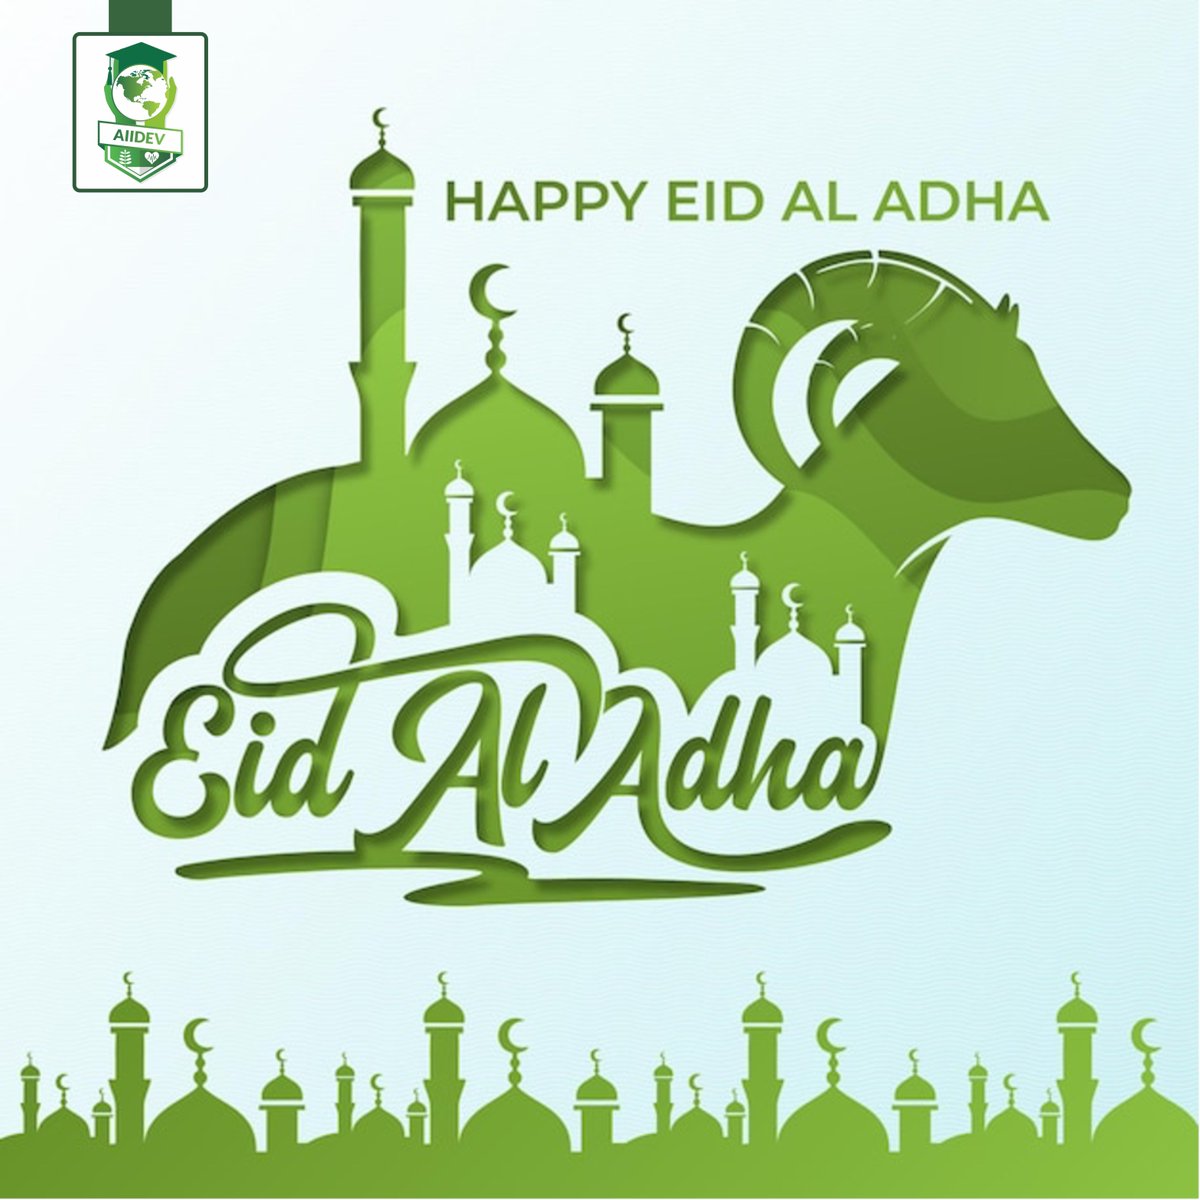 🌙✨ Eid Mubarak! ✨🌙

Wishing you a blessed and memorable Eid filled with cherished moments and delightful smiles. 🌙🎉✨ 

#EidMubarak #TogetherInCompassion #UnityInDiversity #SpreadCompassion